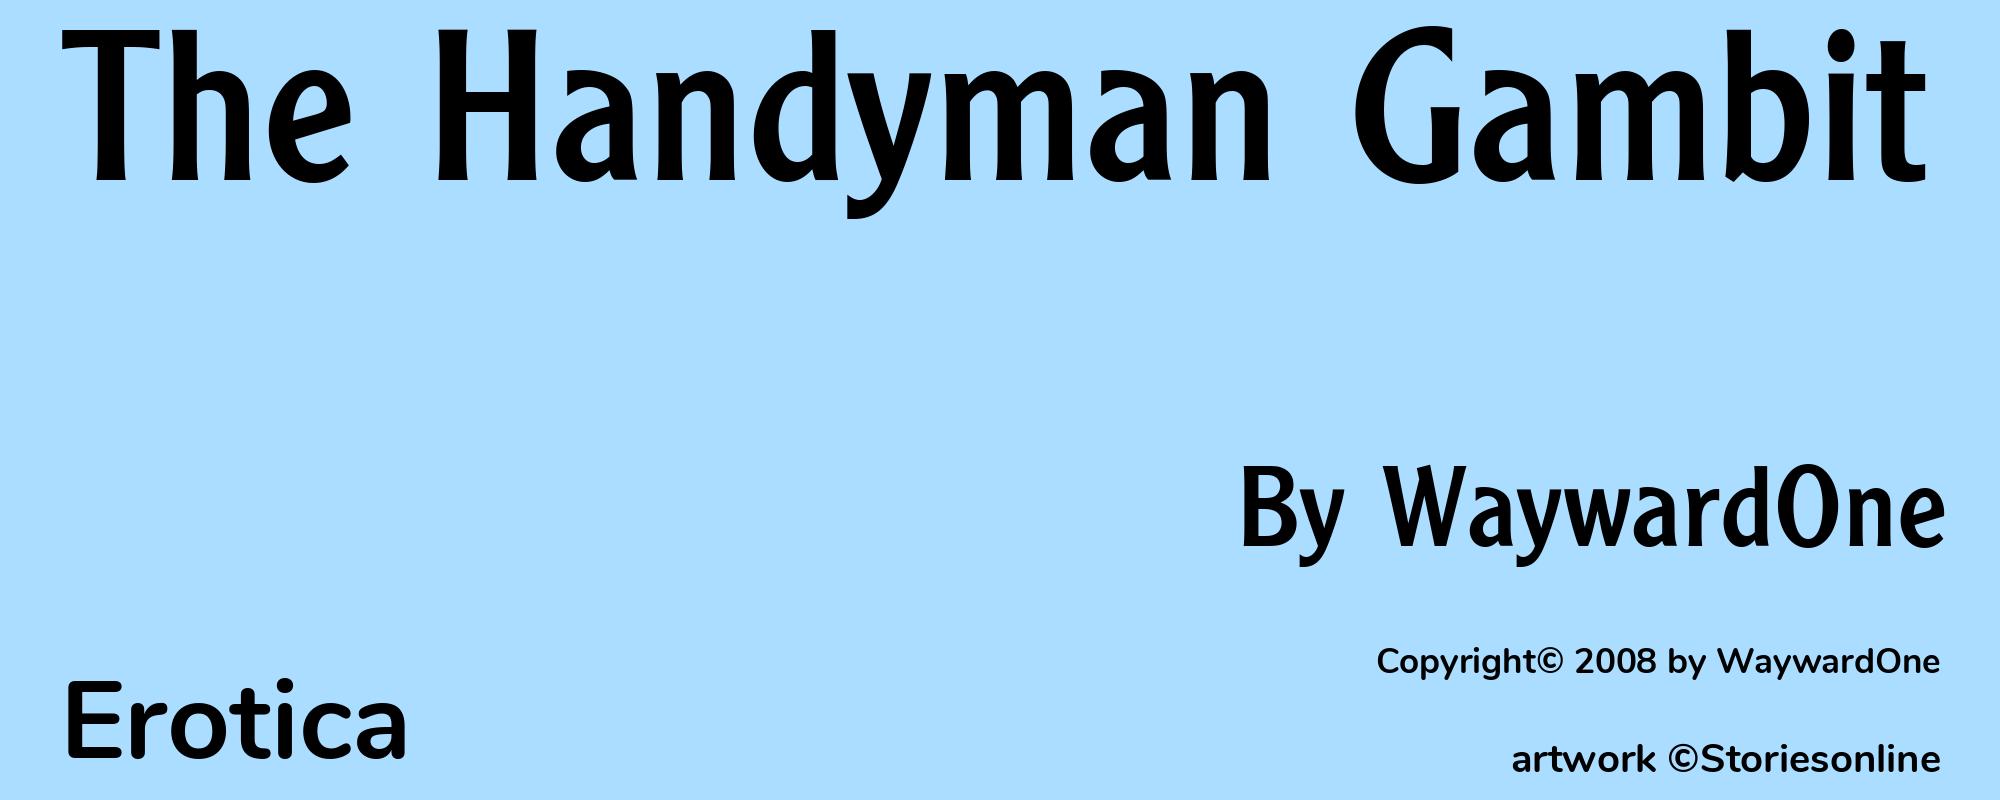 The Handyman Gambit - Cover